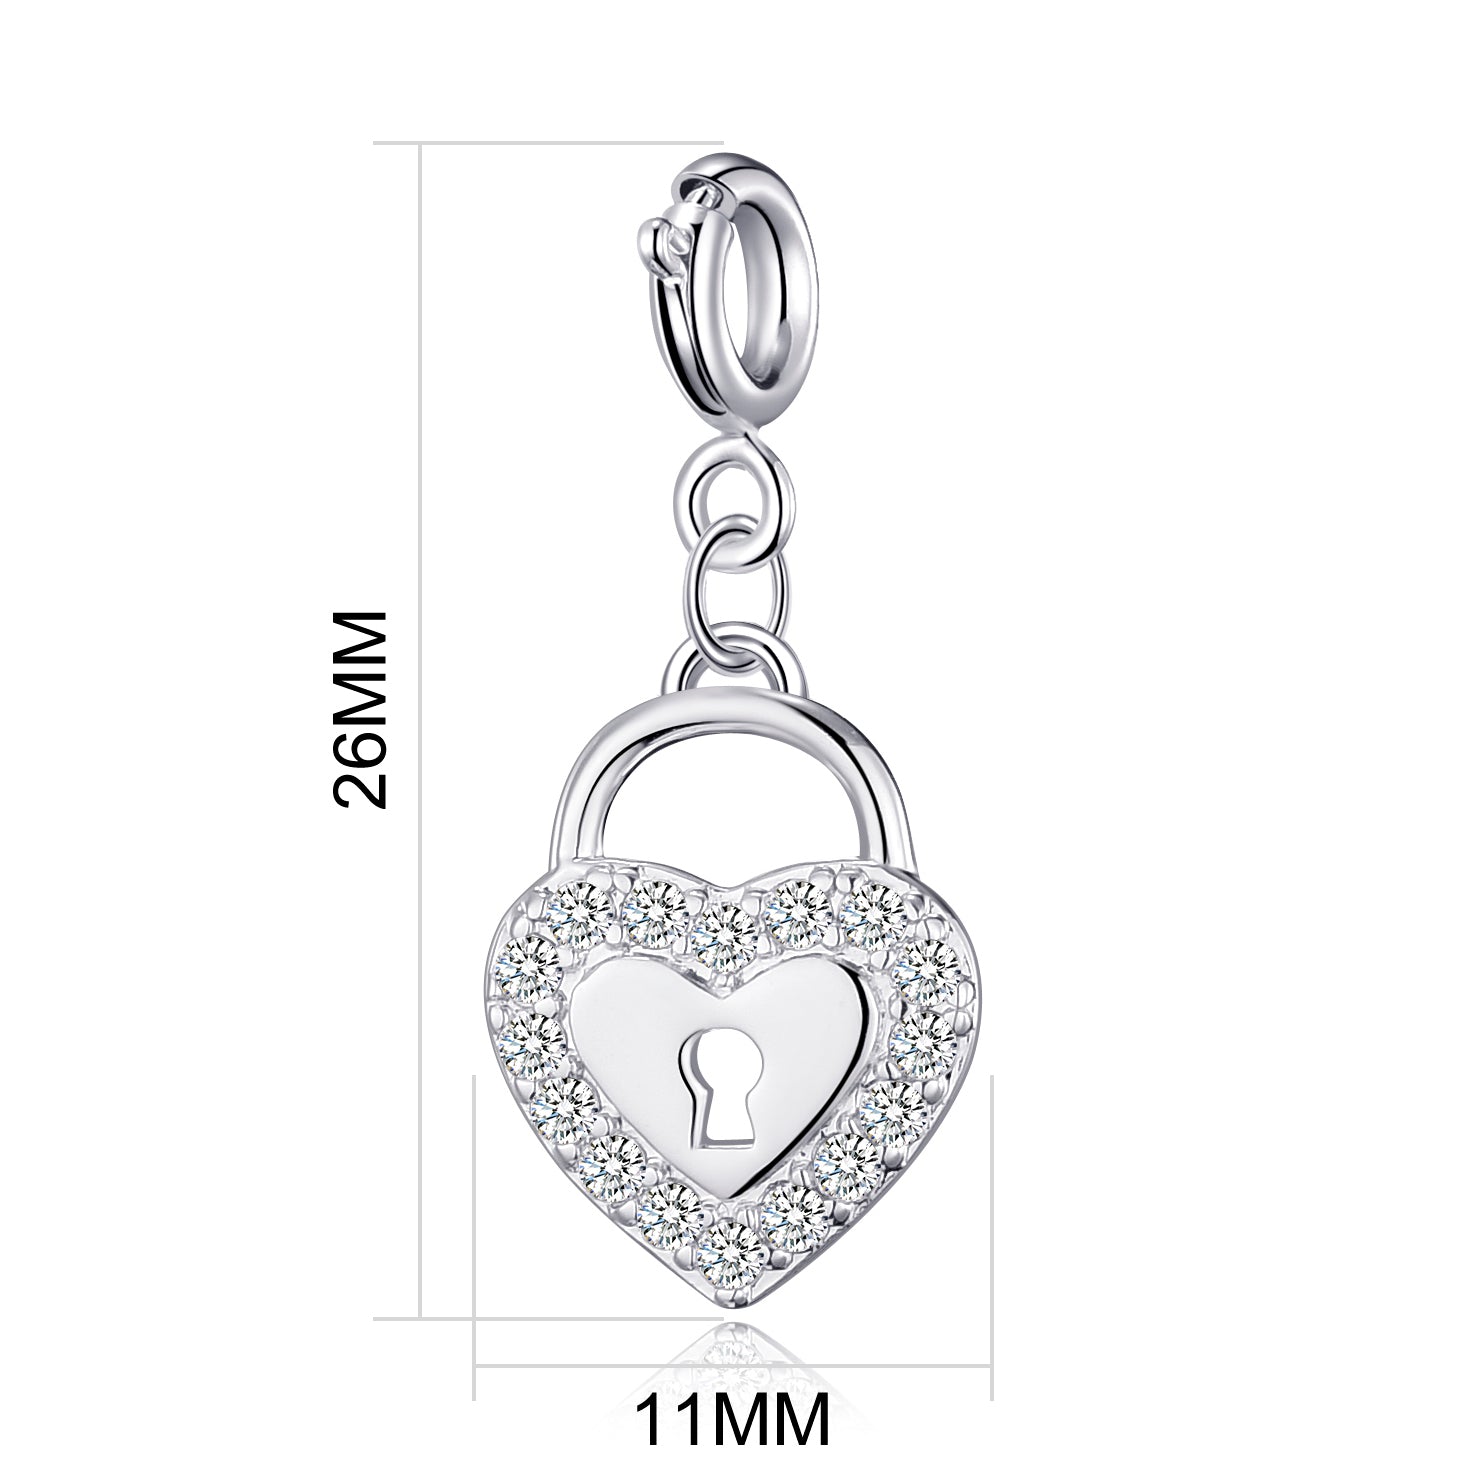 Heart Lock Charm Created with Zircondia® Crystals